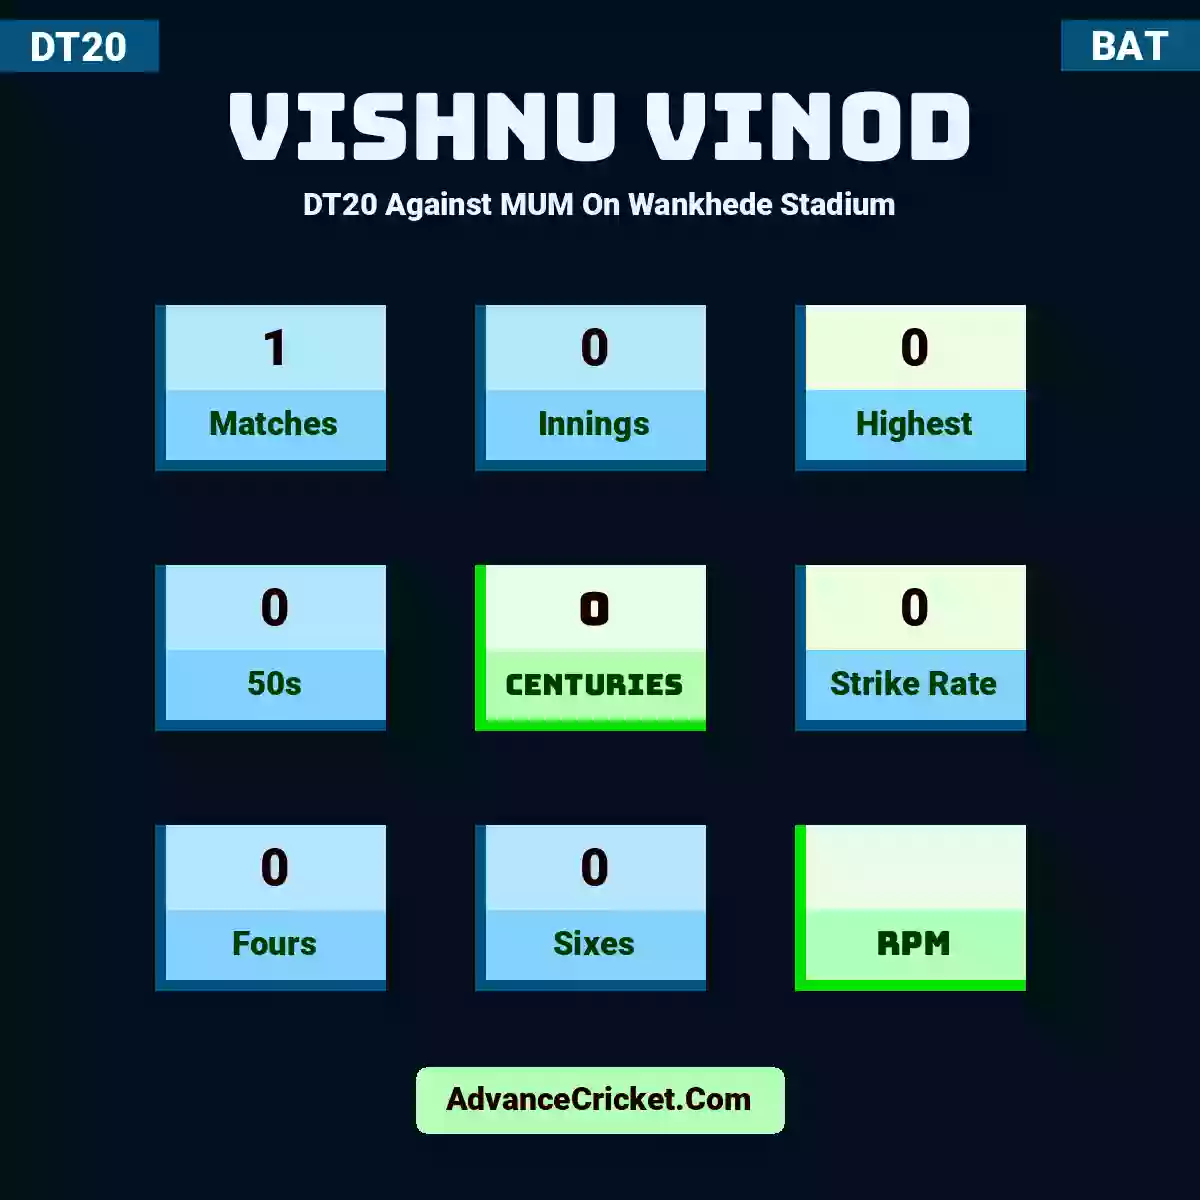 Vishnu Vinod DT20  Against MUM On Wankhede Stadium, Vishnu Vinod played 1 matches, scored 0 runs as highest, 0 half-centuries, and 0 centuries, with a strike rate of 0. V.Vinod hit 0 fours and 0 sixes.